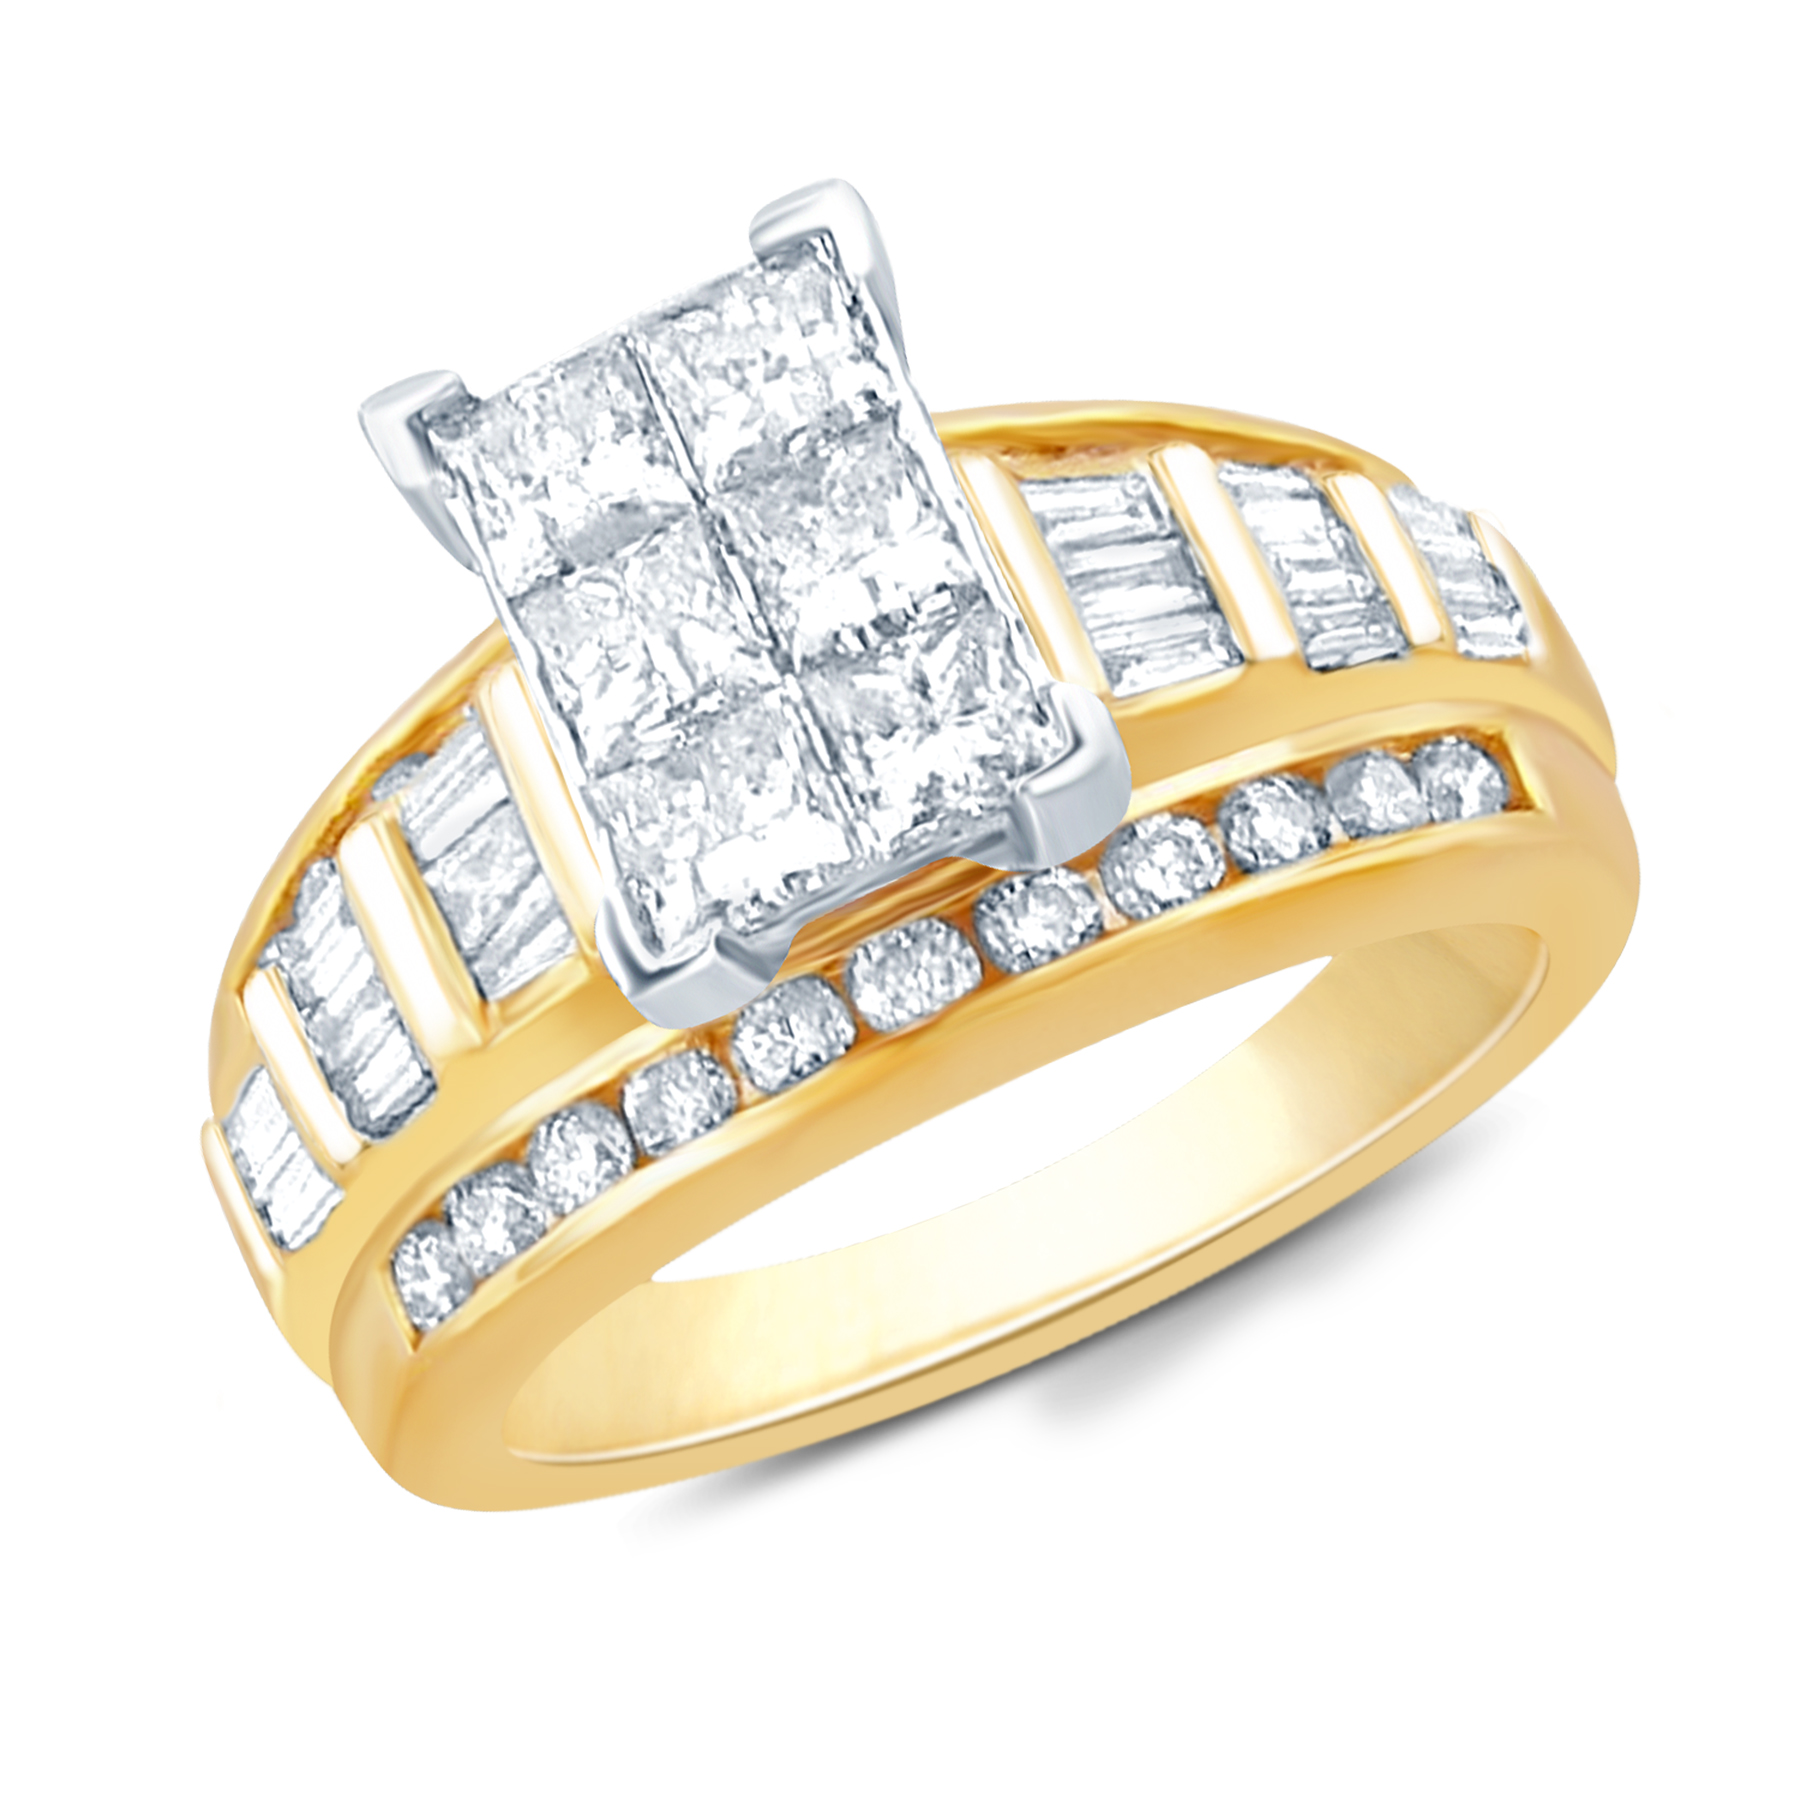 Tradition Diamond 10K Yellow Gold 2 CTTW Certified Diamond Ring